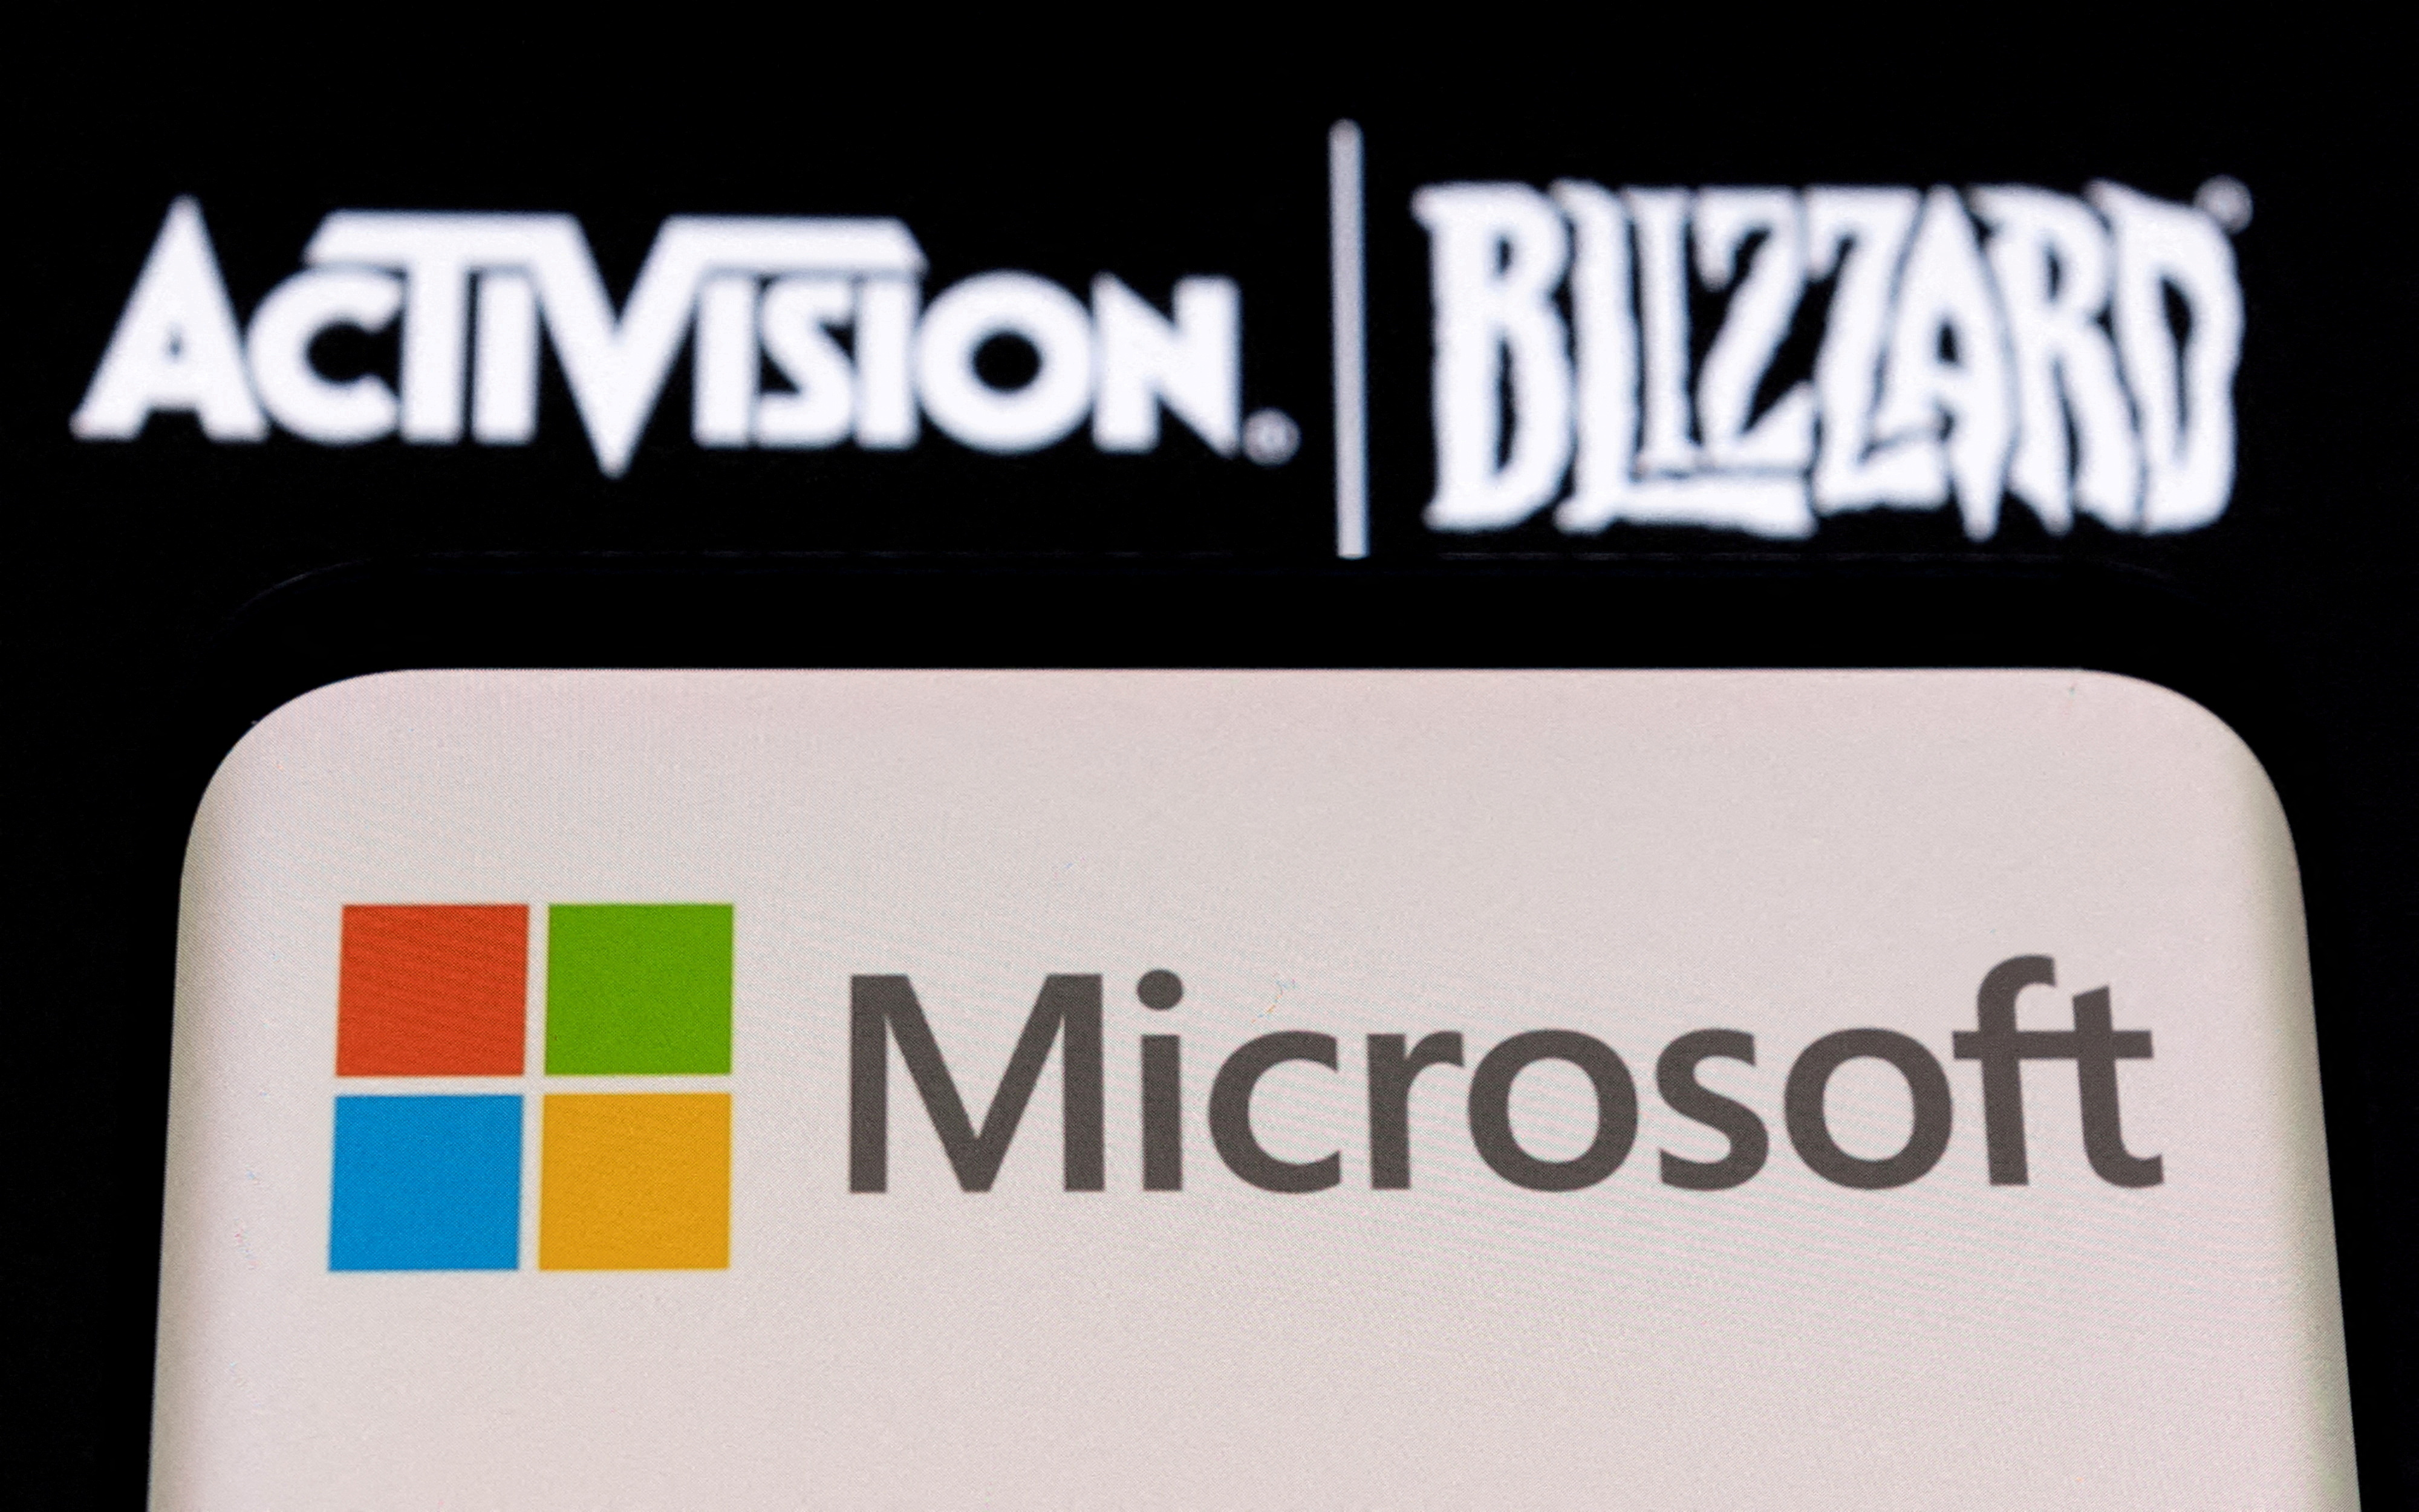 Microsoft and Activision Blizzard logos